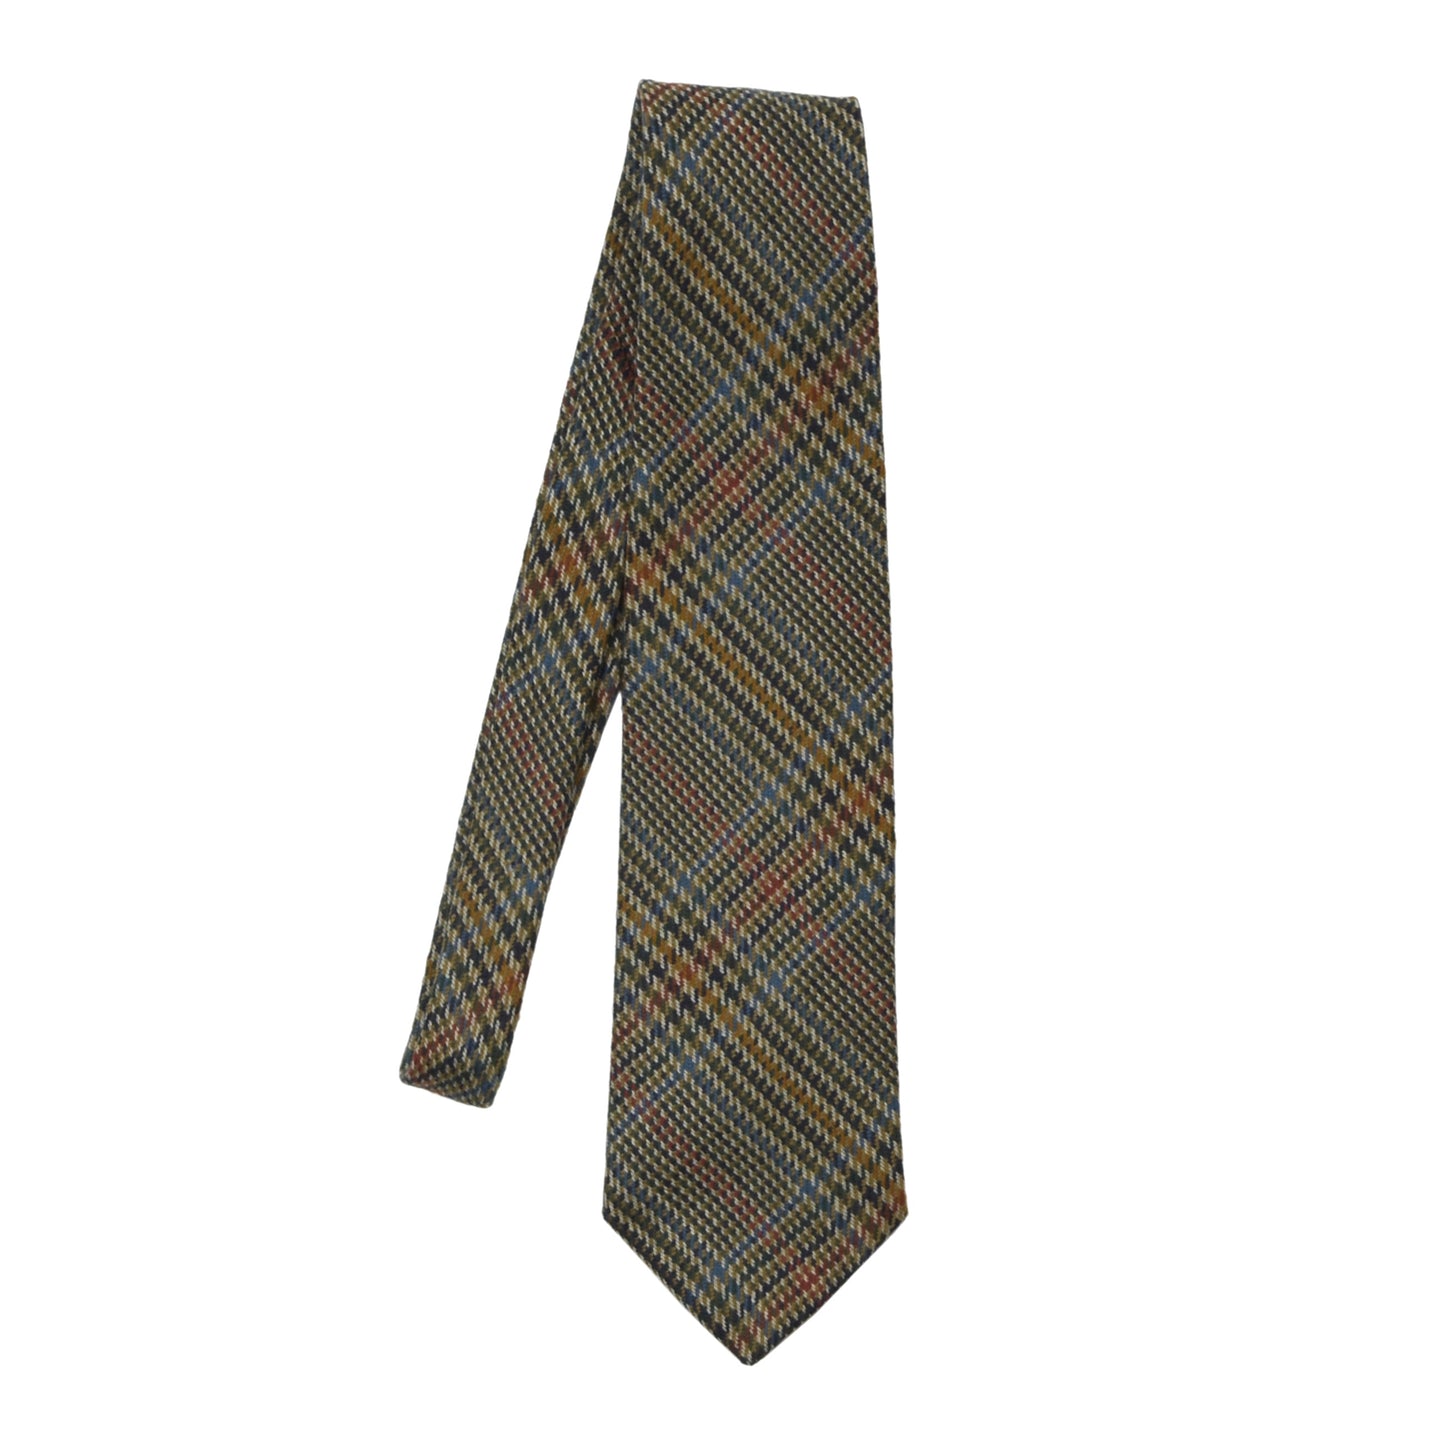 DAKS London 100% Wool Tie ca. 143.5cm/9.5cm - Plaid